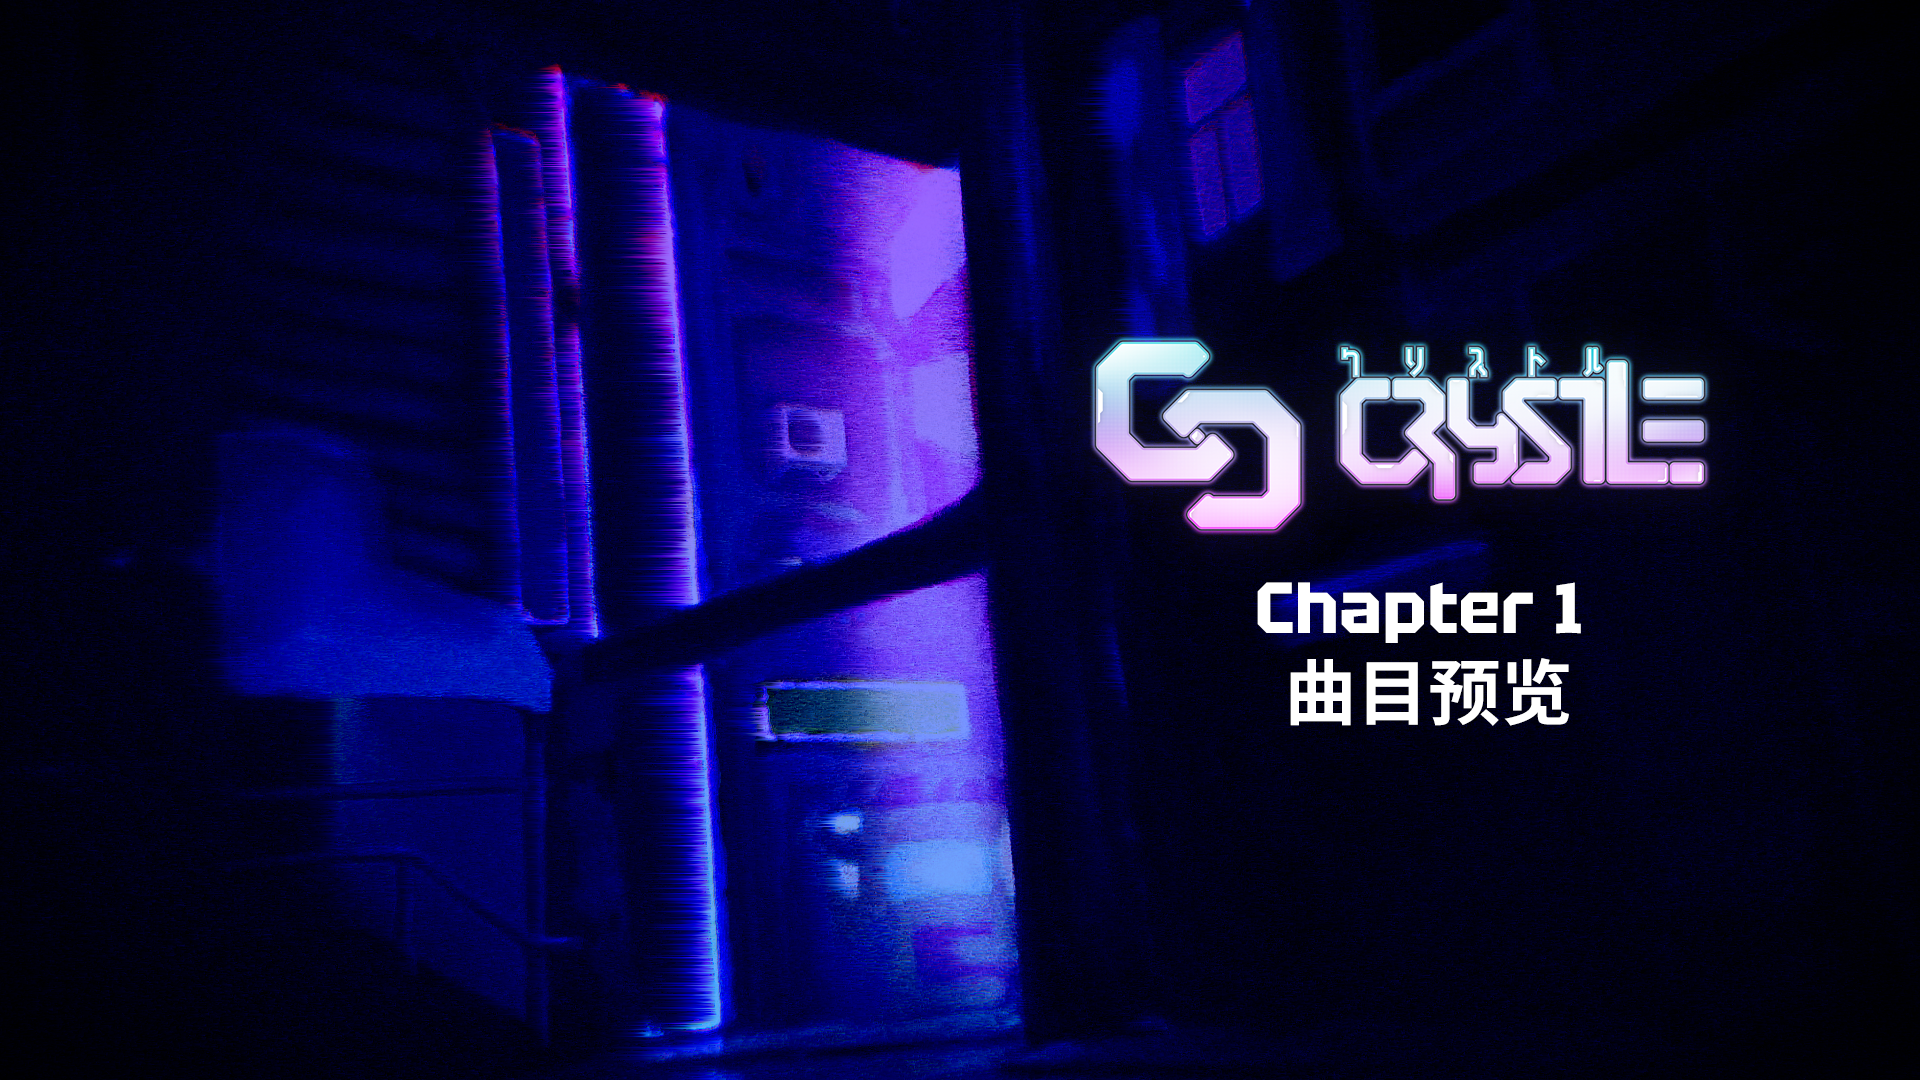 《Crystle》Chapter 1 『黎明觅渡』曲目预览